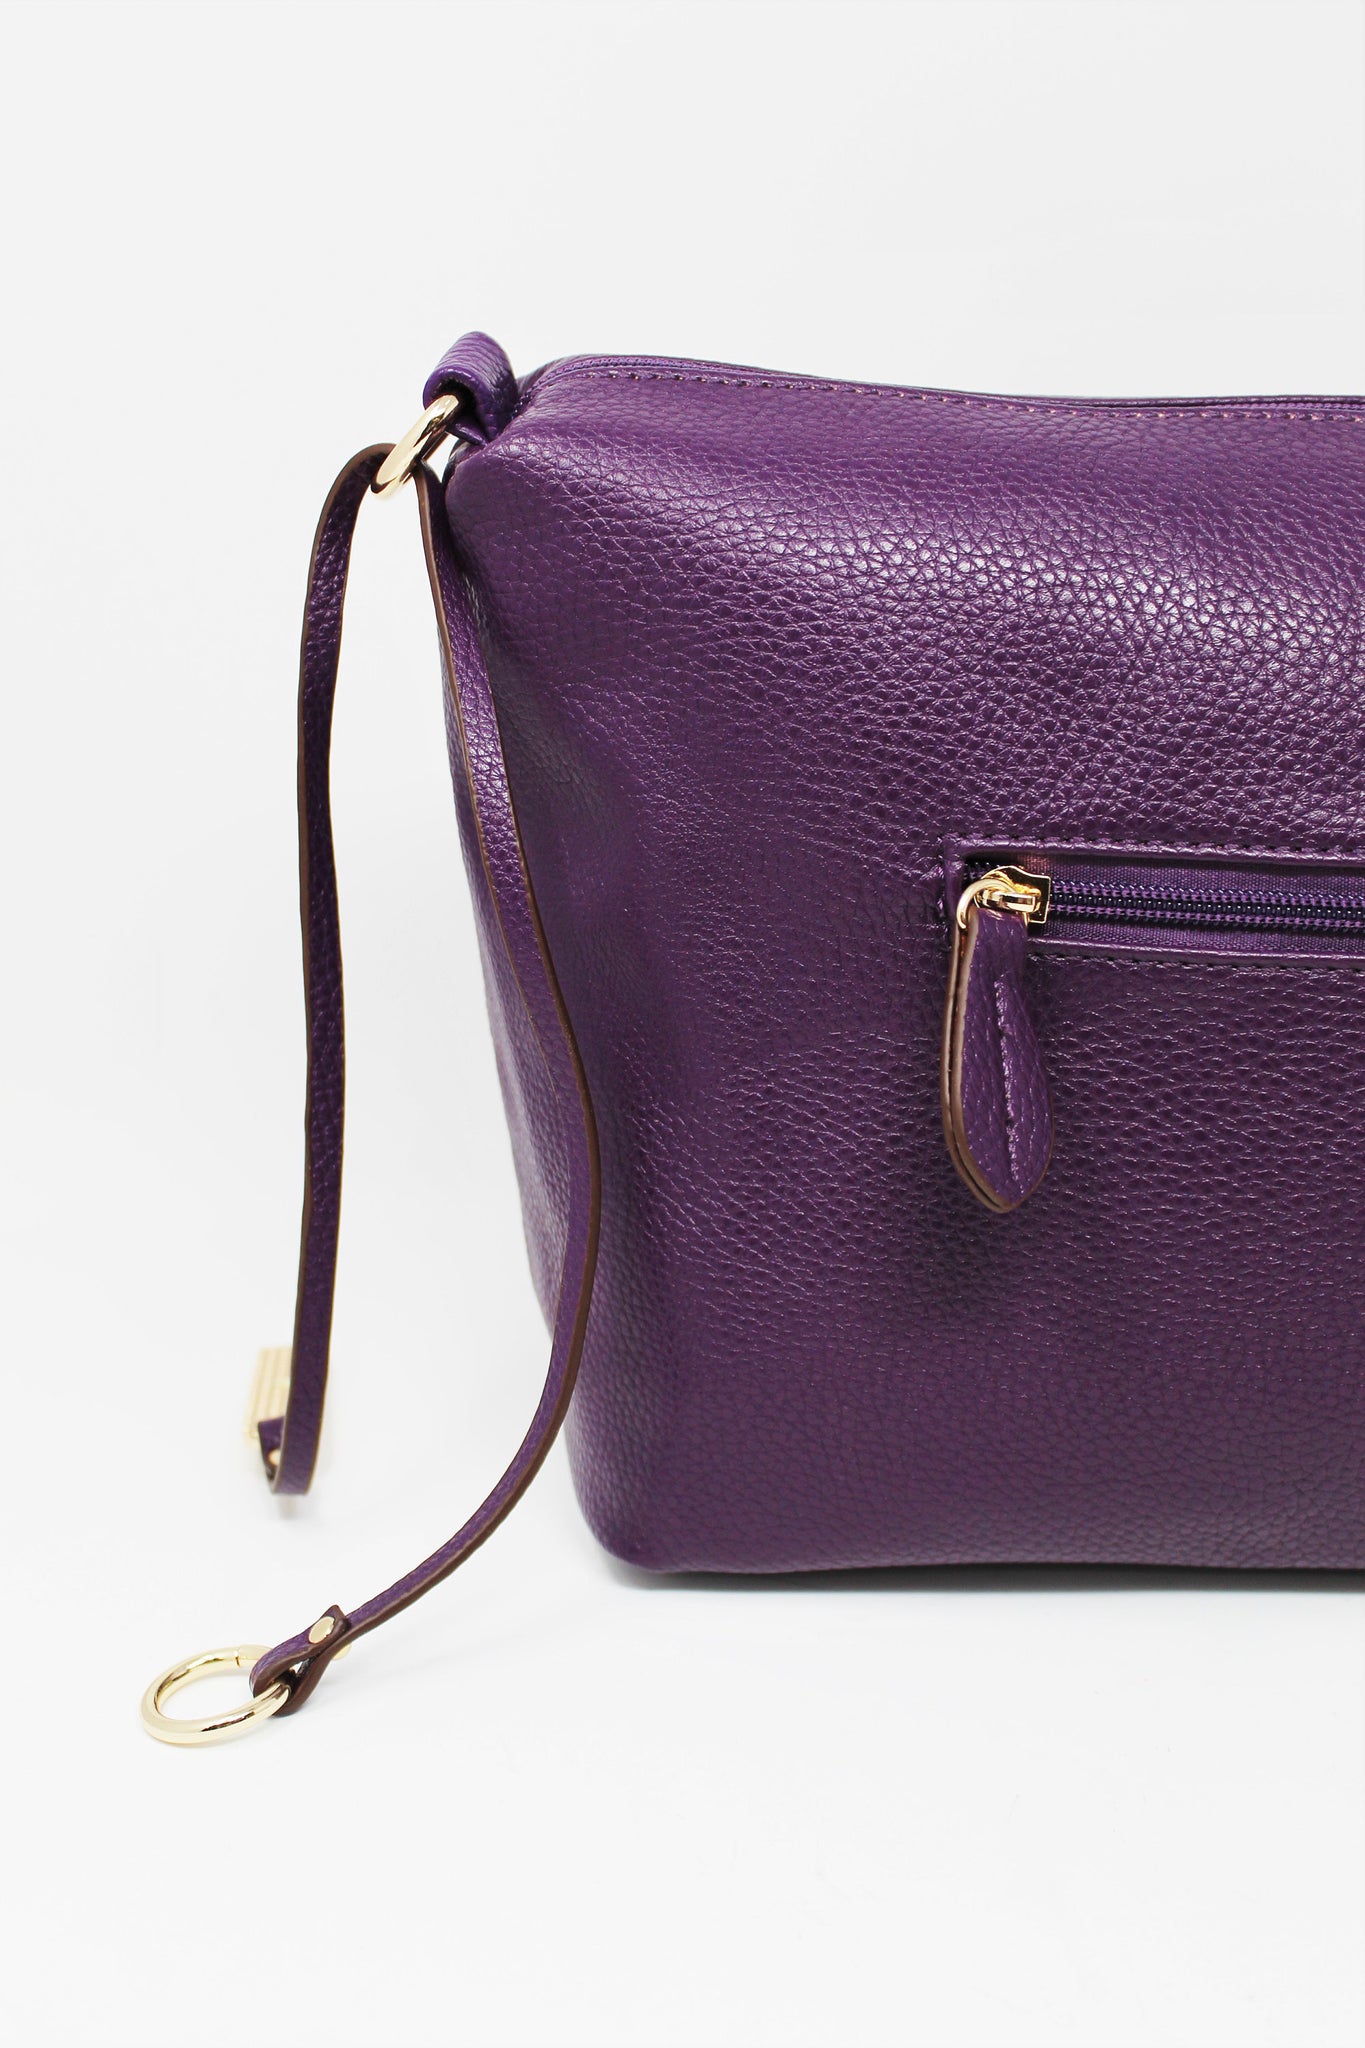 Buy PIJUSHI Floral Purse Designer Satchel Handbags Women Totes Shoulder Bags  22328 (one size, Purple) at Amazon.in